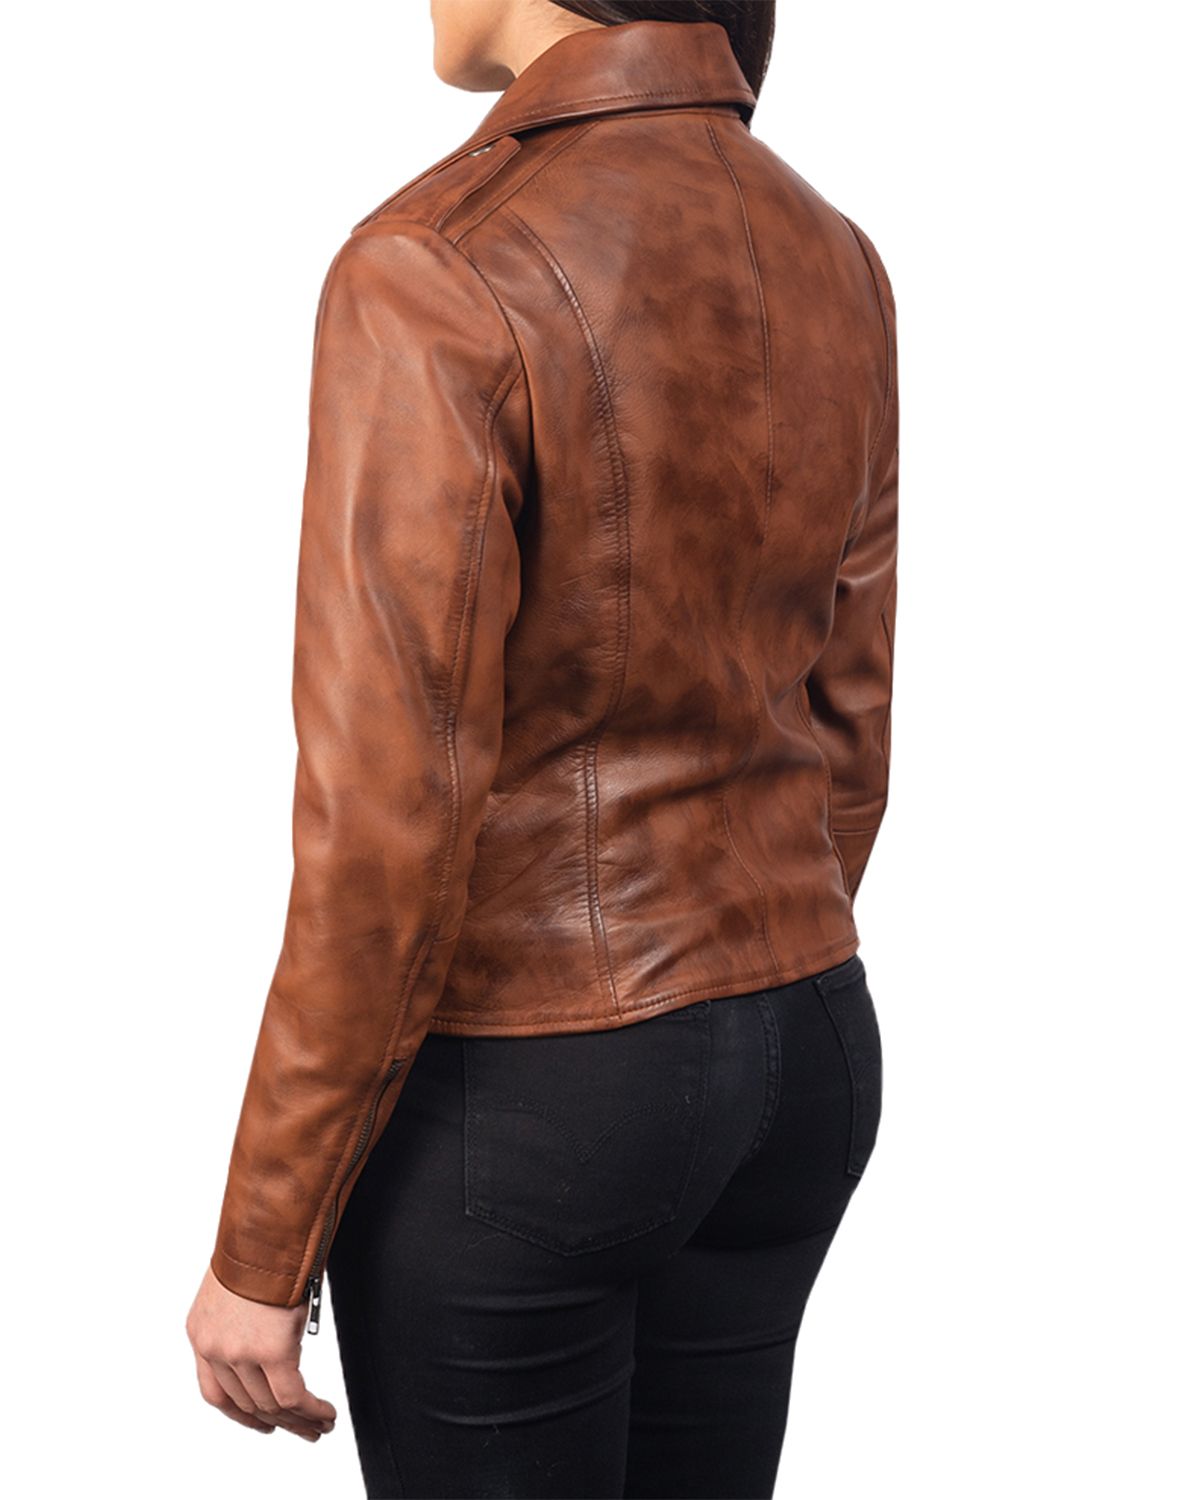 Women's Notch Collar Stylish Biker Leather Jacket